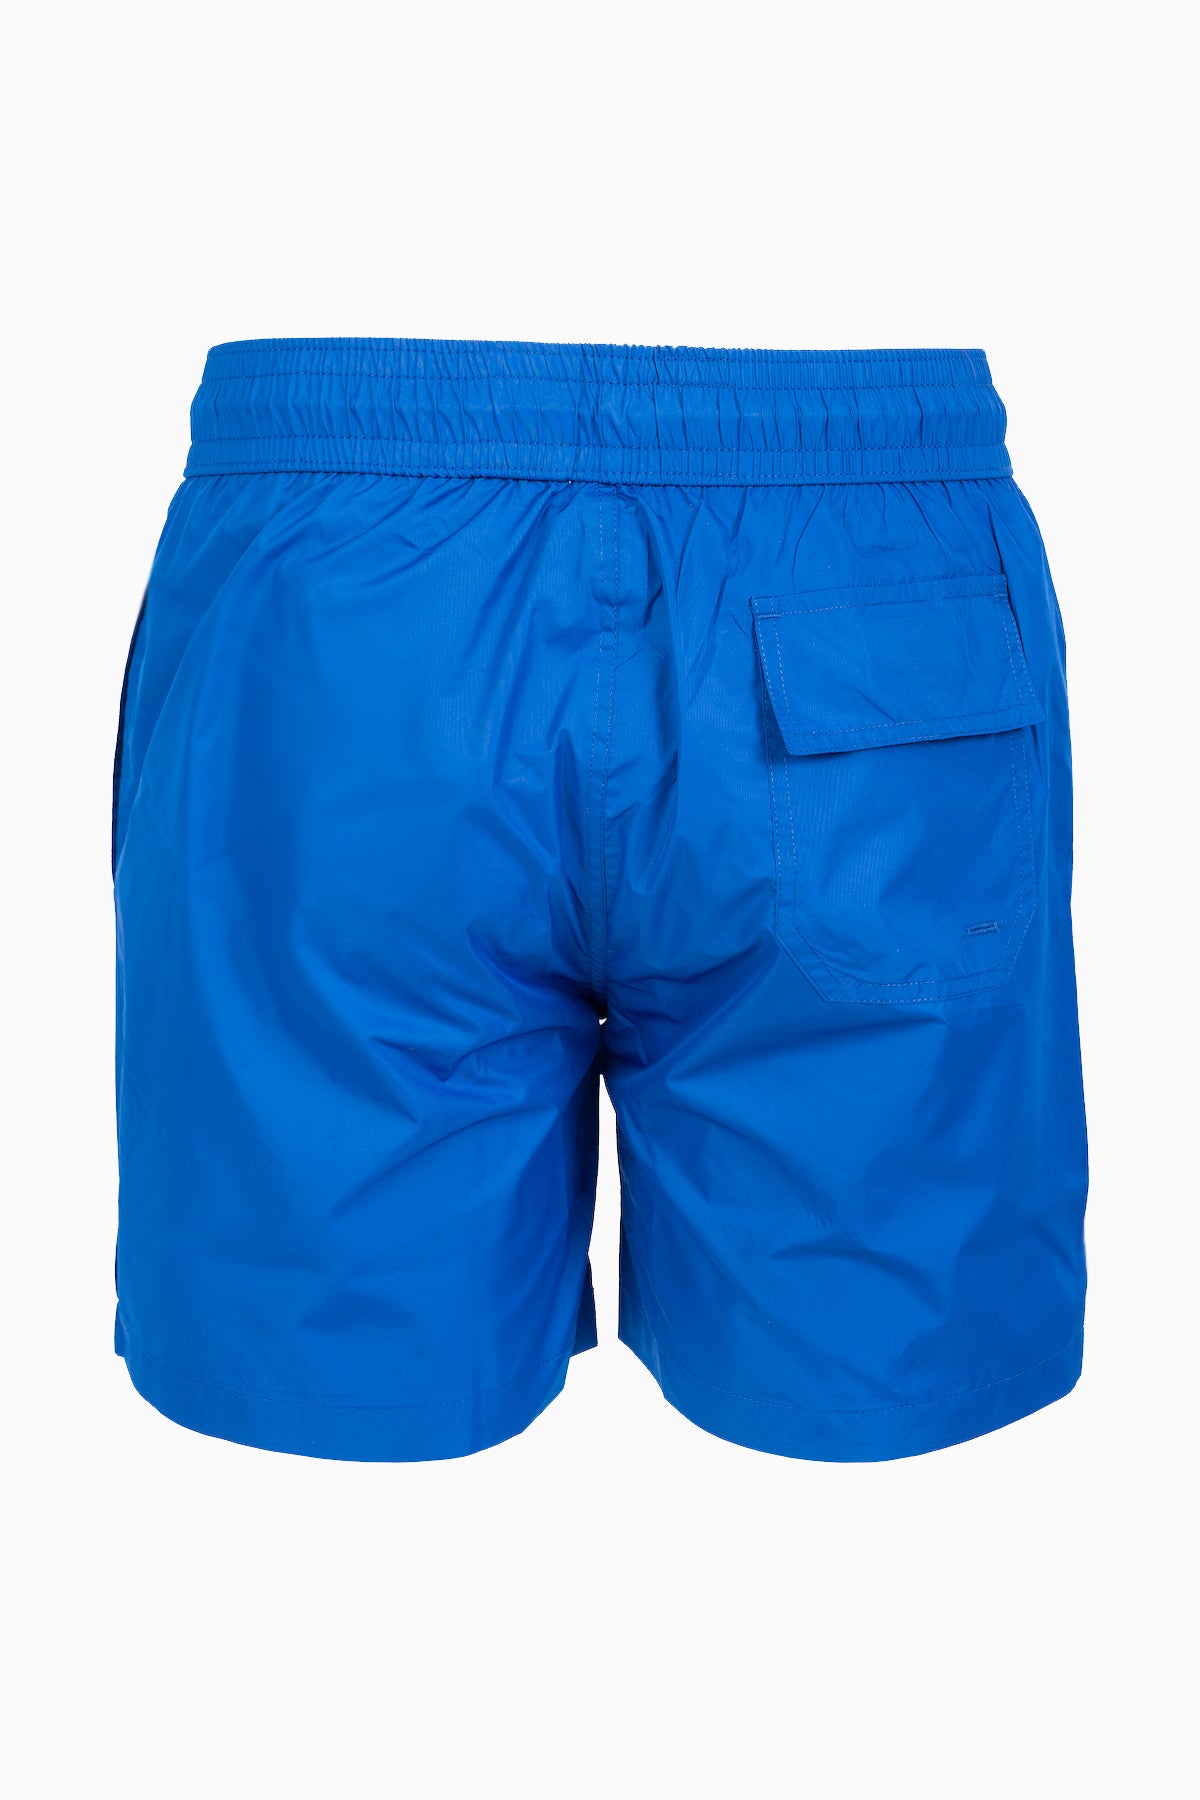 Men's Shorts - Royal Blue